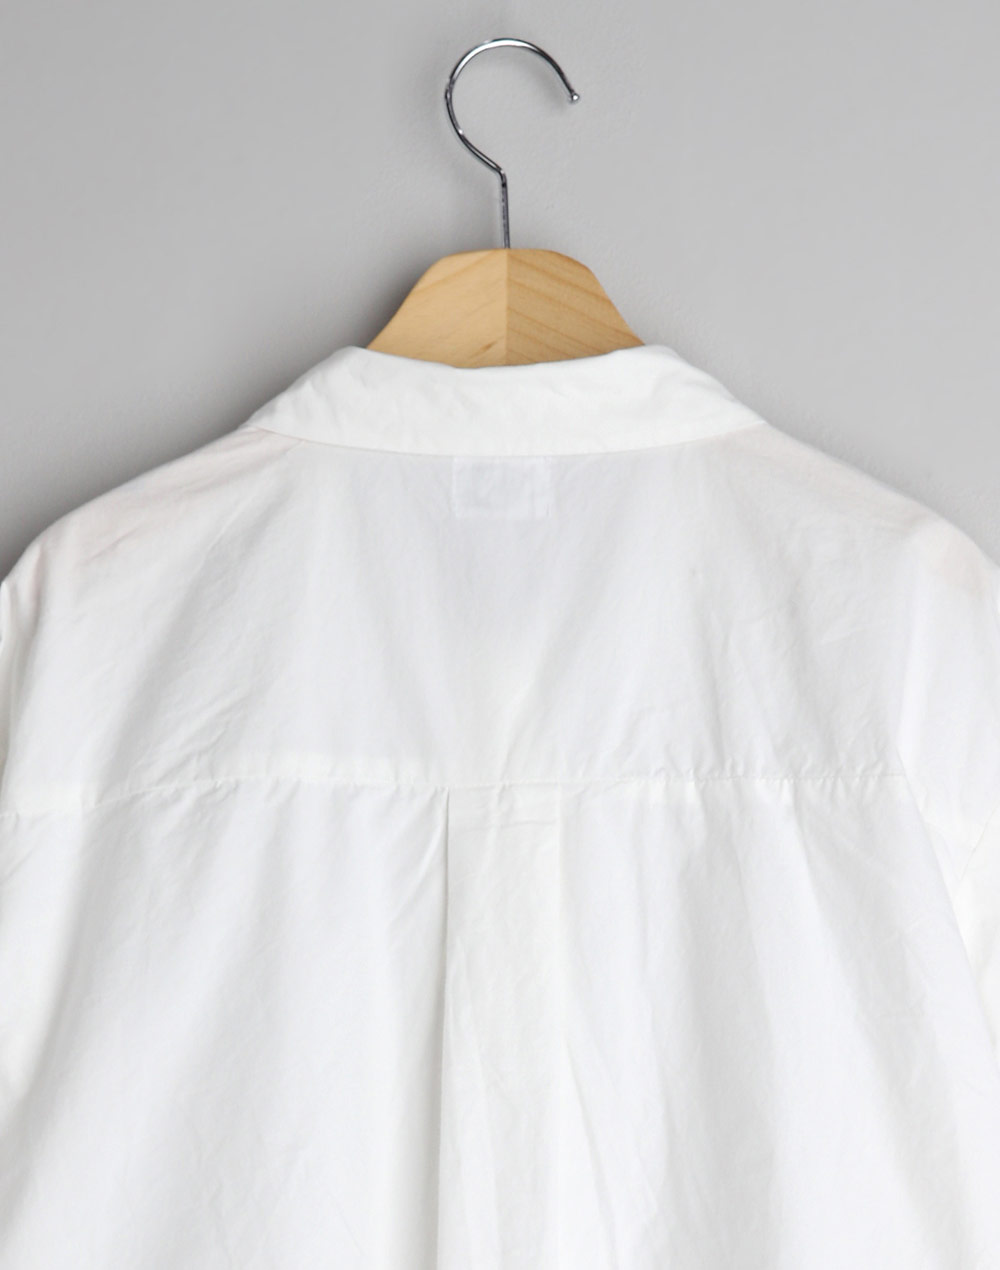 shirt one-piece・t283112（ワンピース/ロング）| m1lm1l | 東京ガールズマーケット